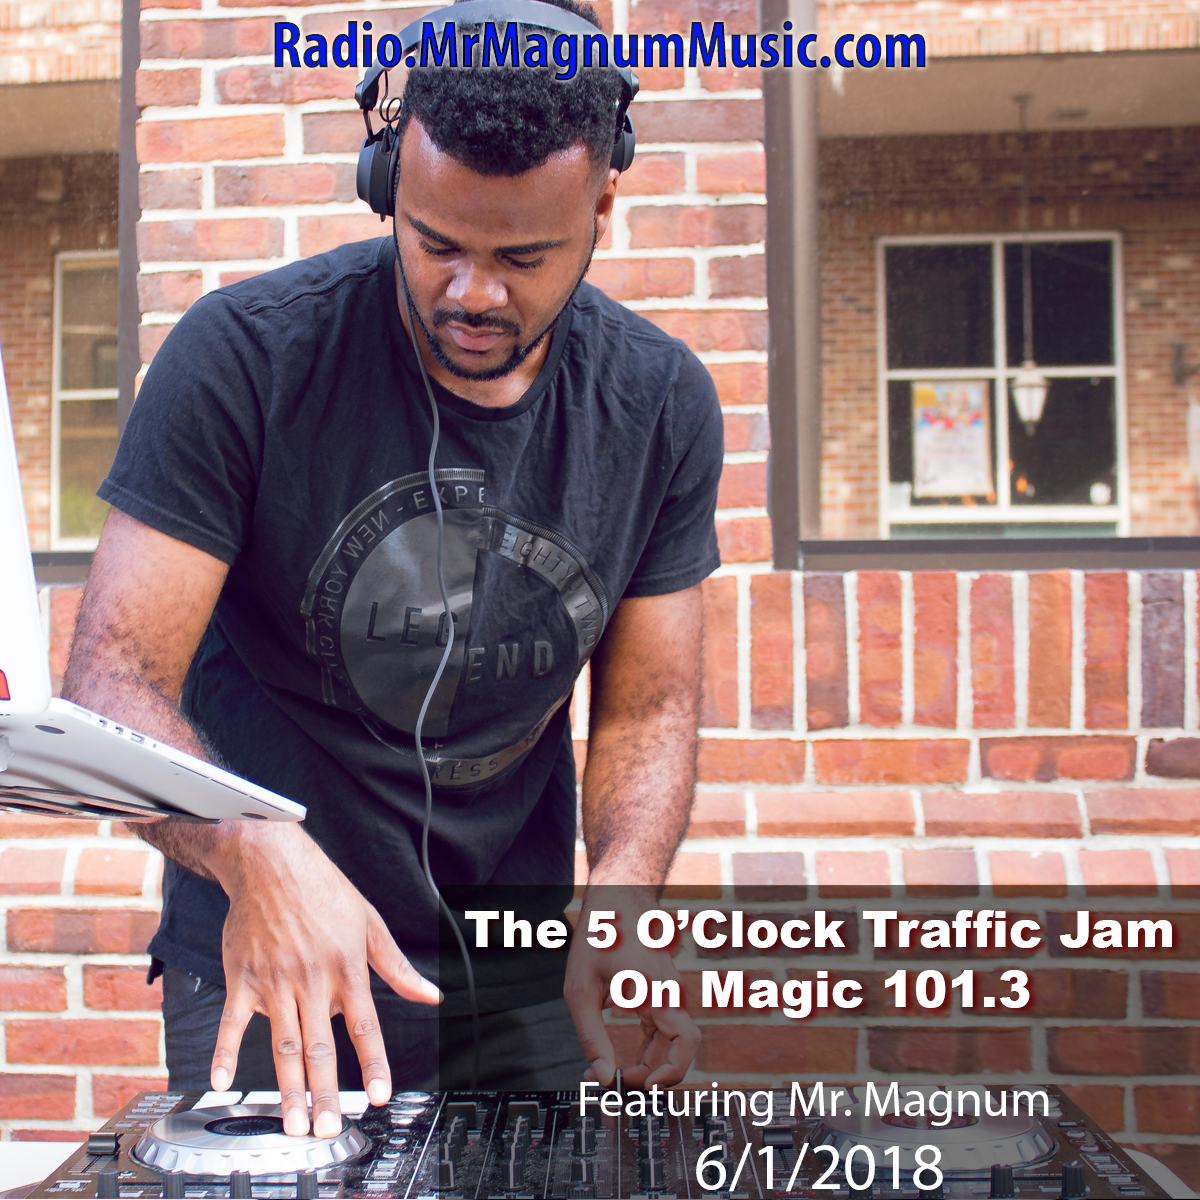 The 5 O'Clock Traffic Jam 20180601 featuring Gainesville's #1 DJ, Mr. Magnum on Magic 101.3